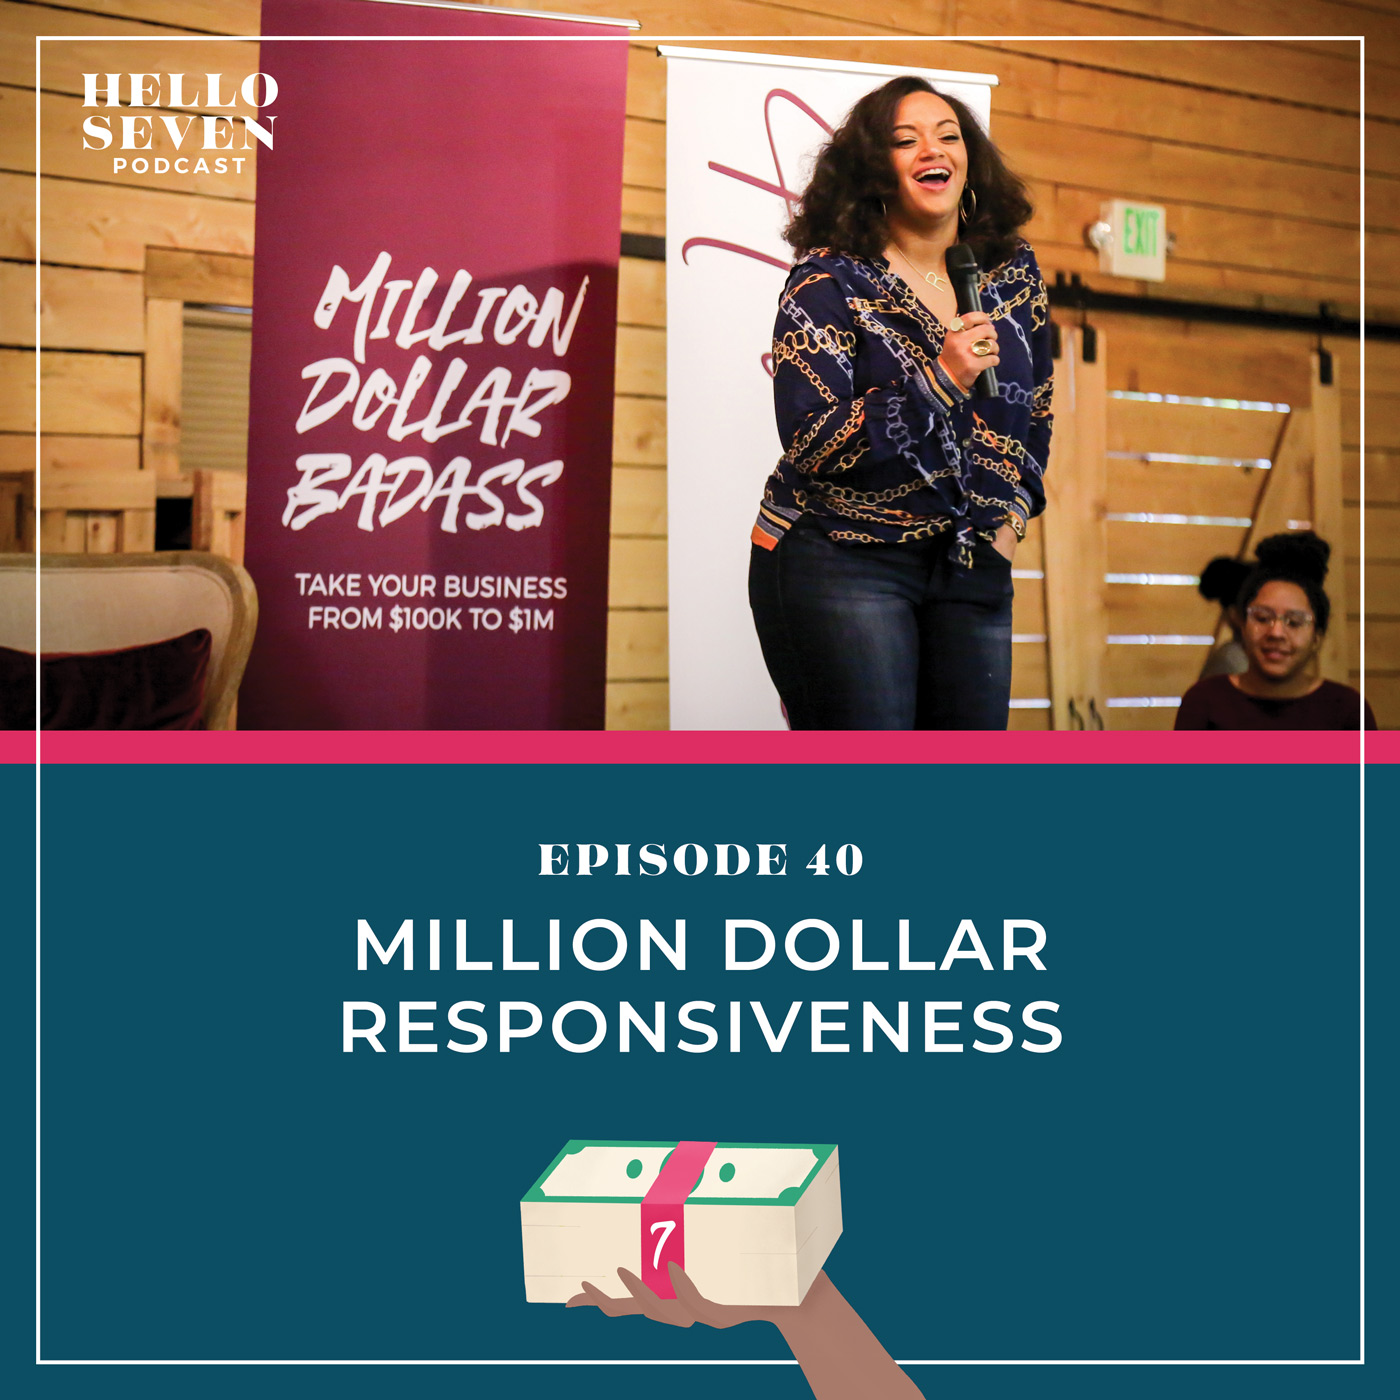 Million Dollar Responsiveness